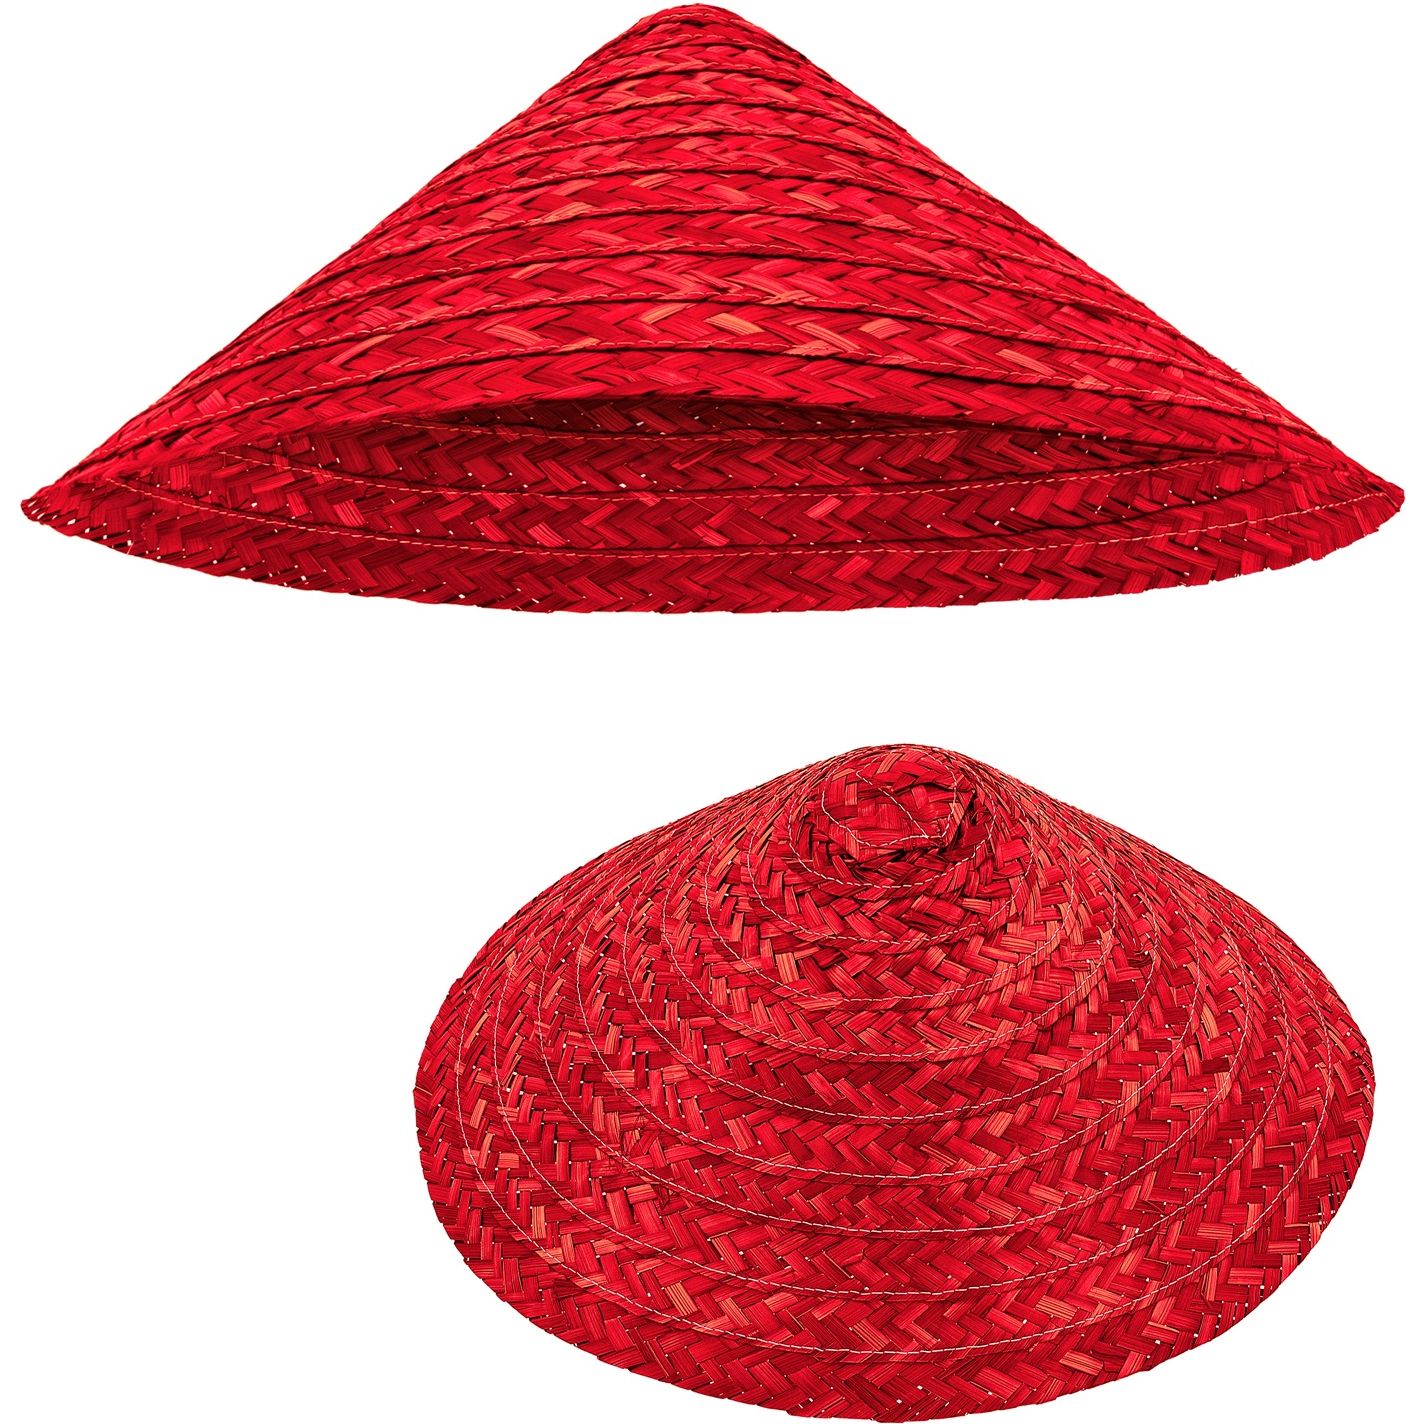 Vietkong hoed rood